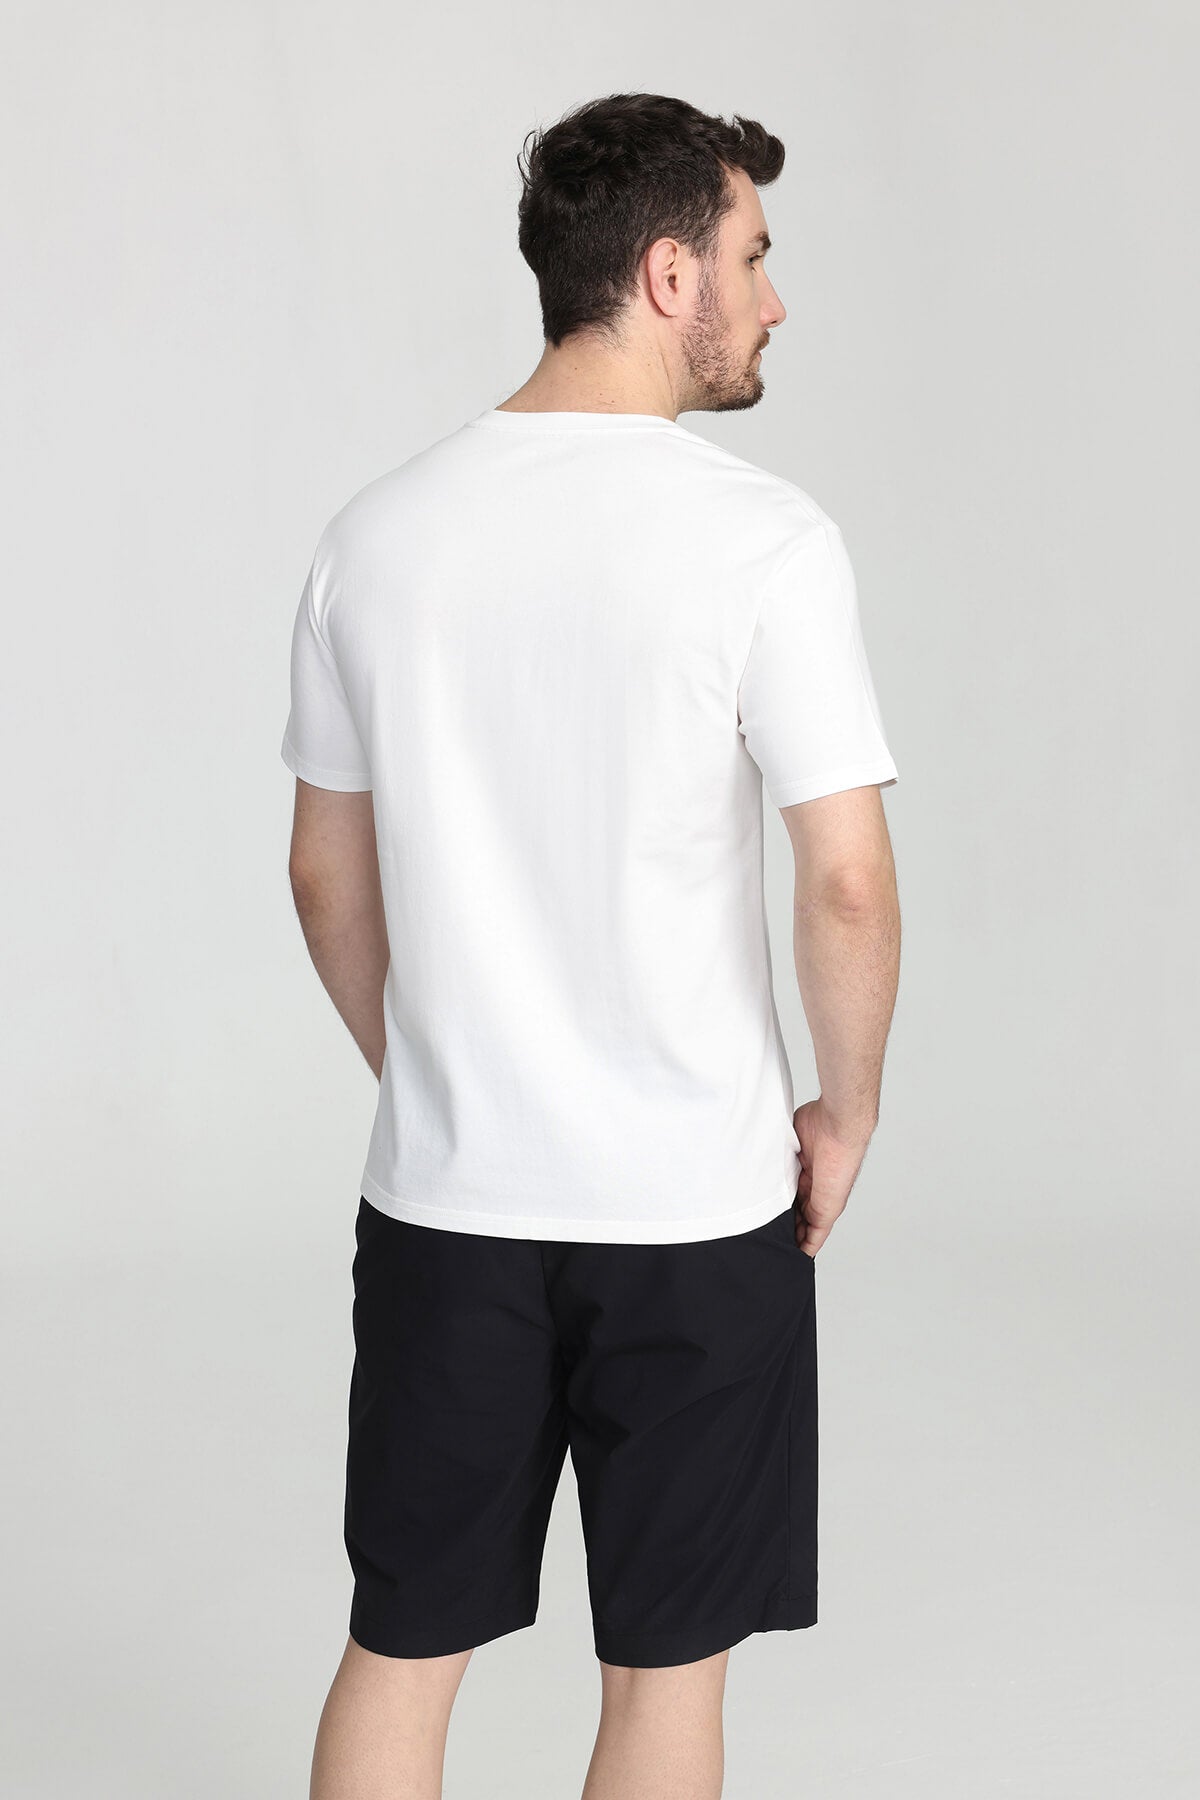 Ecoer- Men's 100% Organic Cotton Fundamental V-neck T-shirt Organic Cotton  Clothing for MeN – Ecoer Fashion